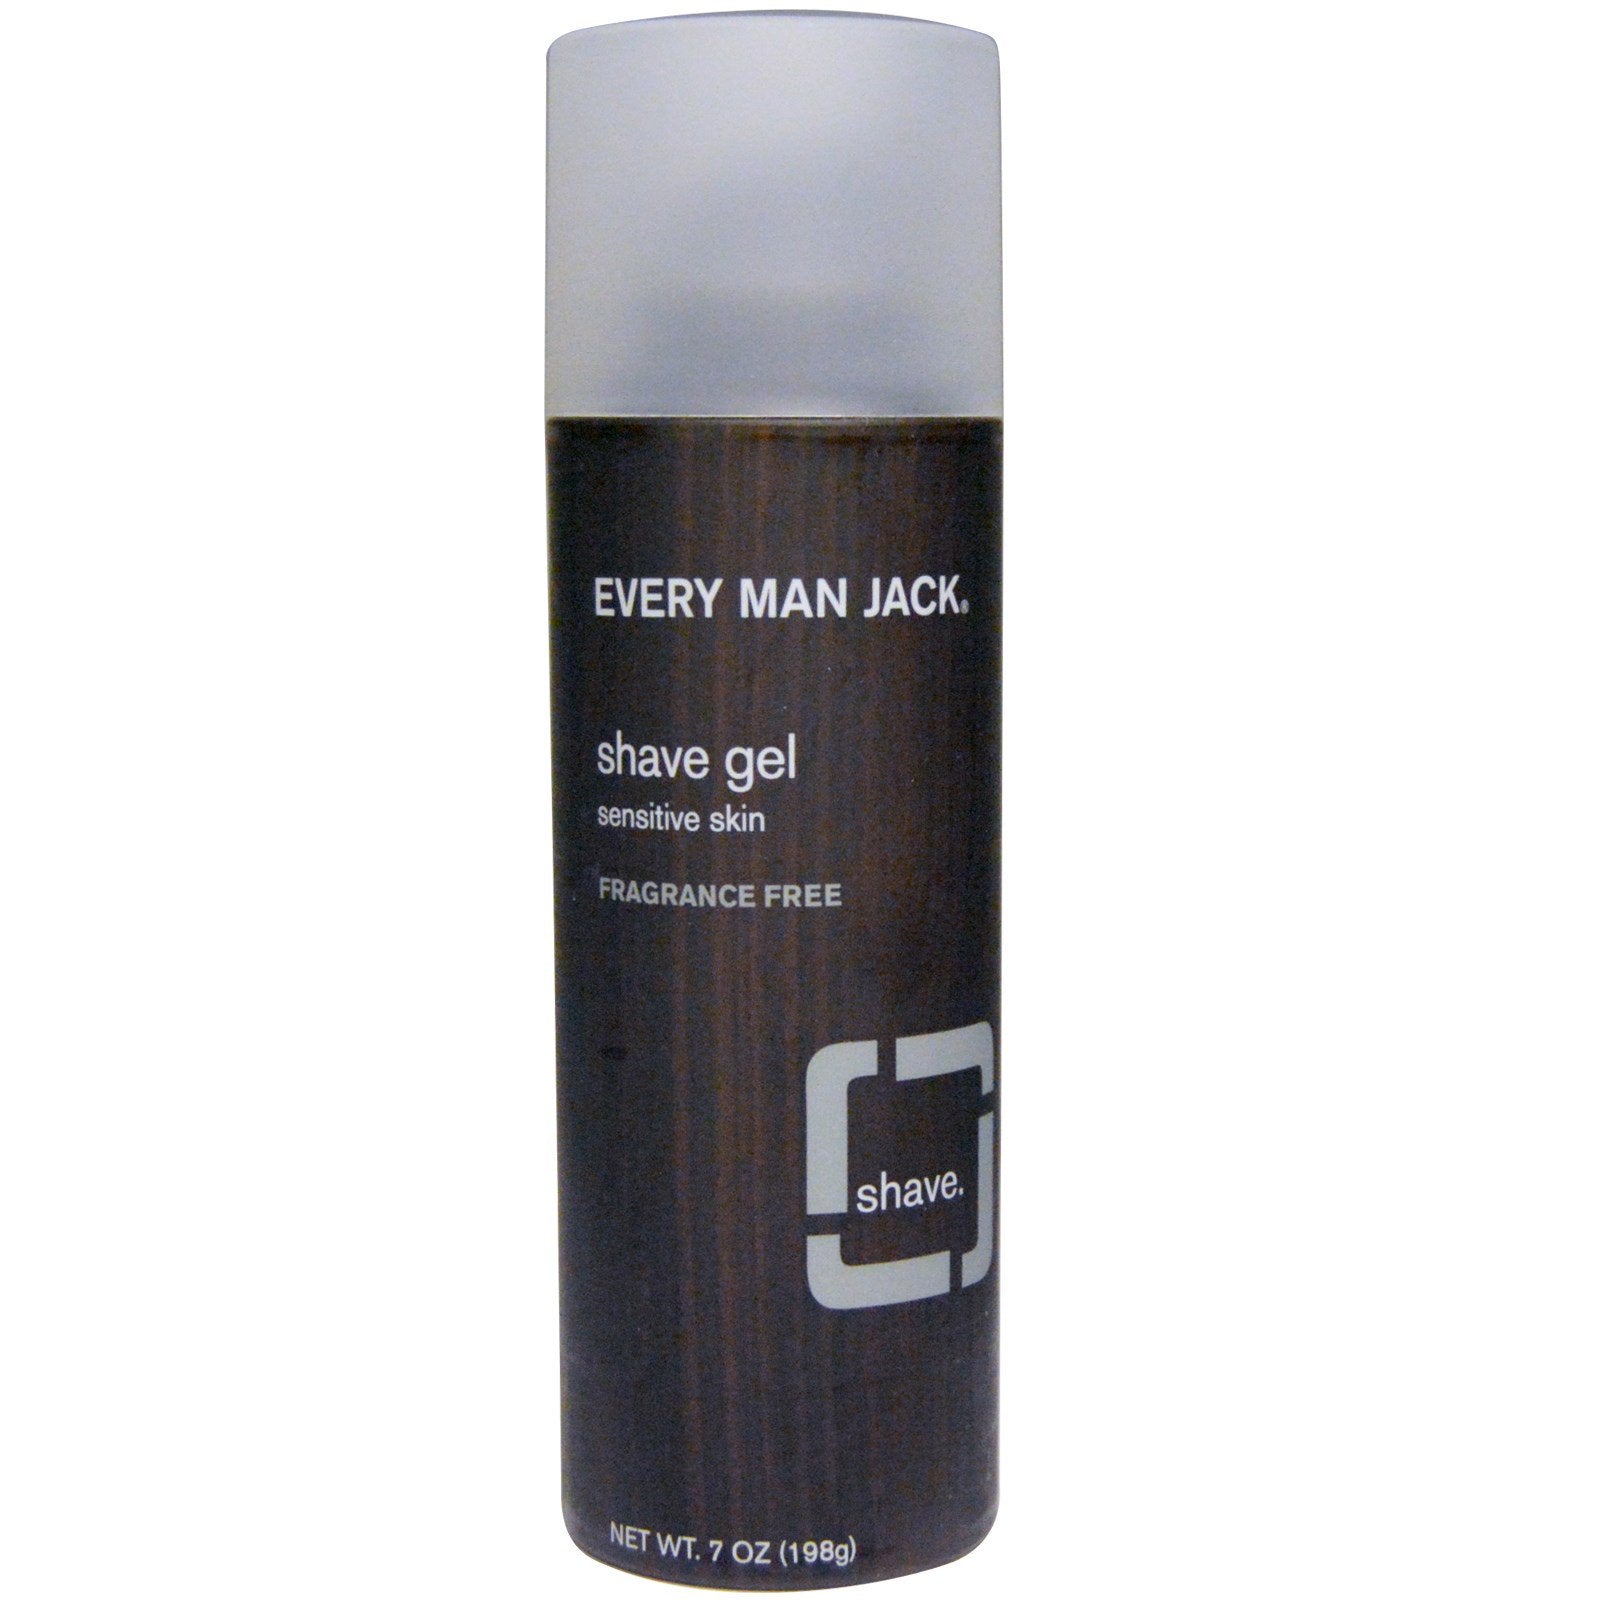 Every Man Jack Fragrance Free Shave Gel 198g